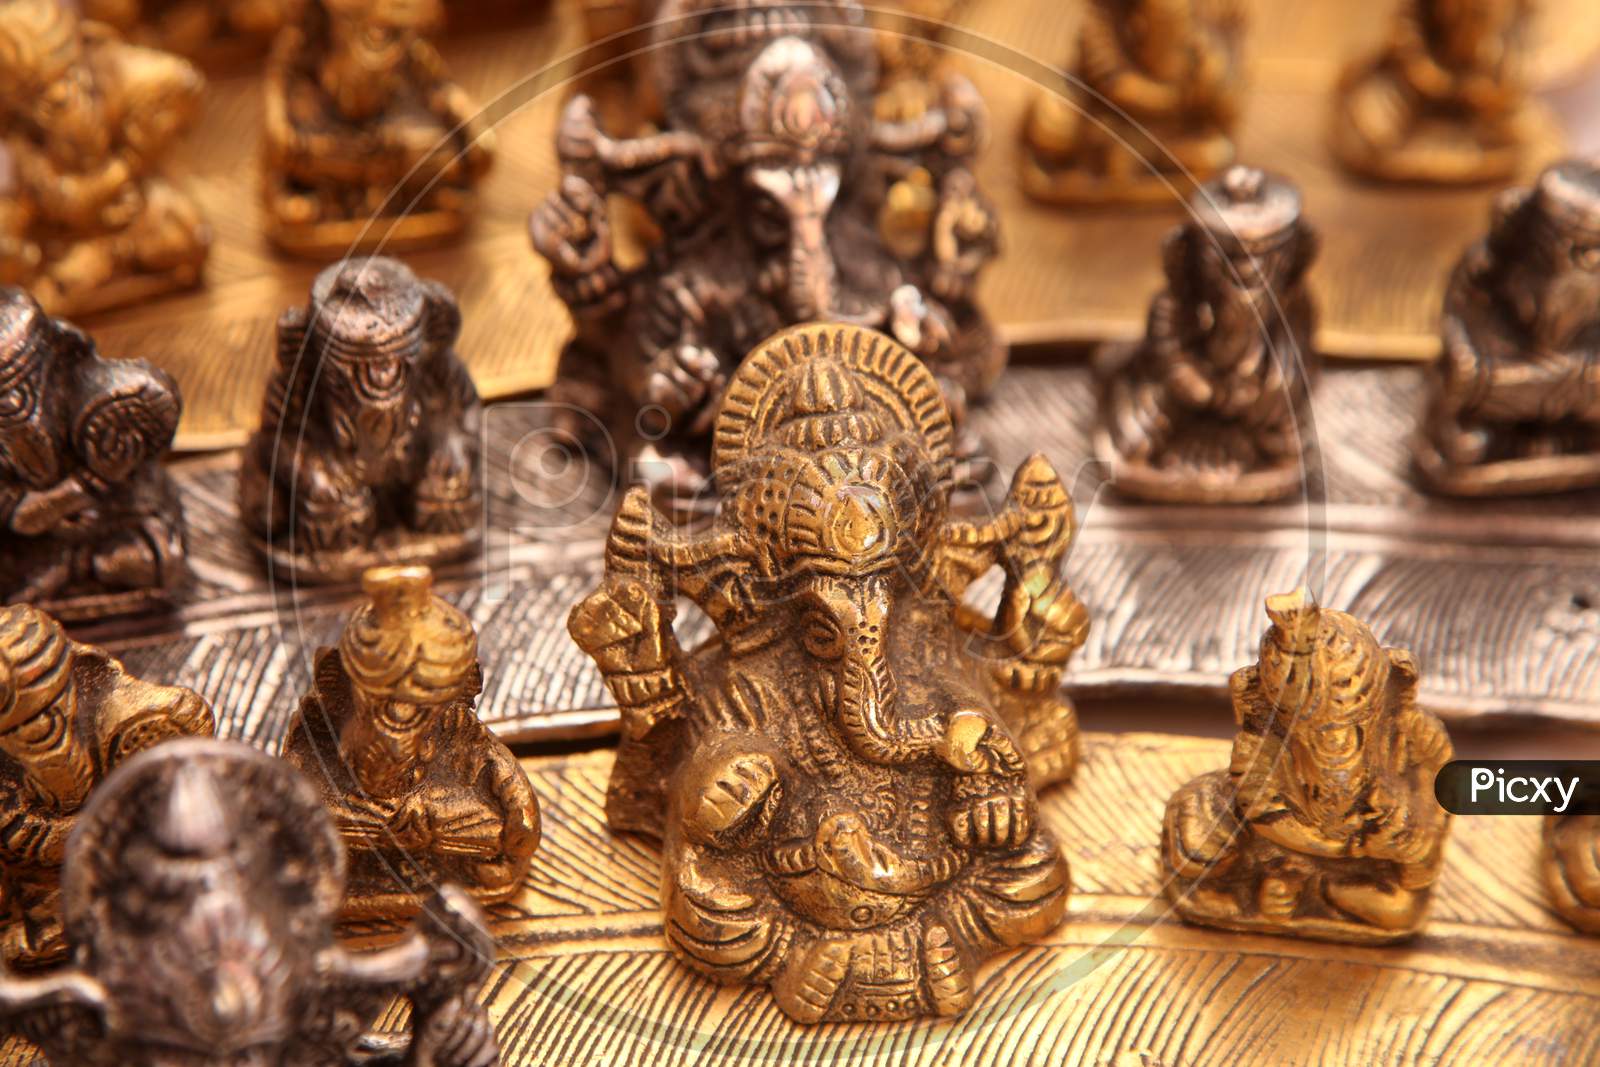 Selective Focus on Lord Ganesha Idols